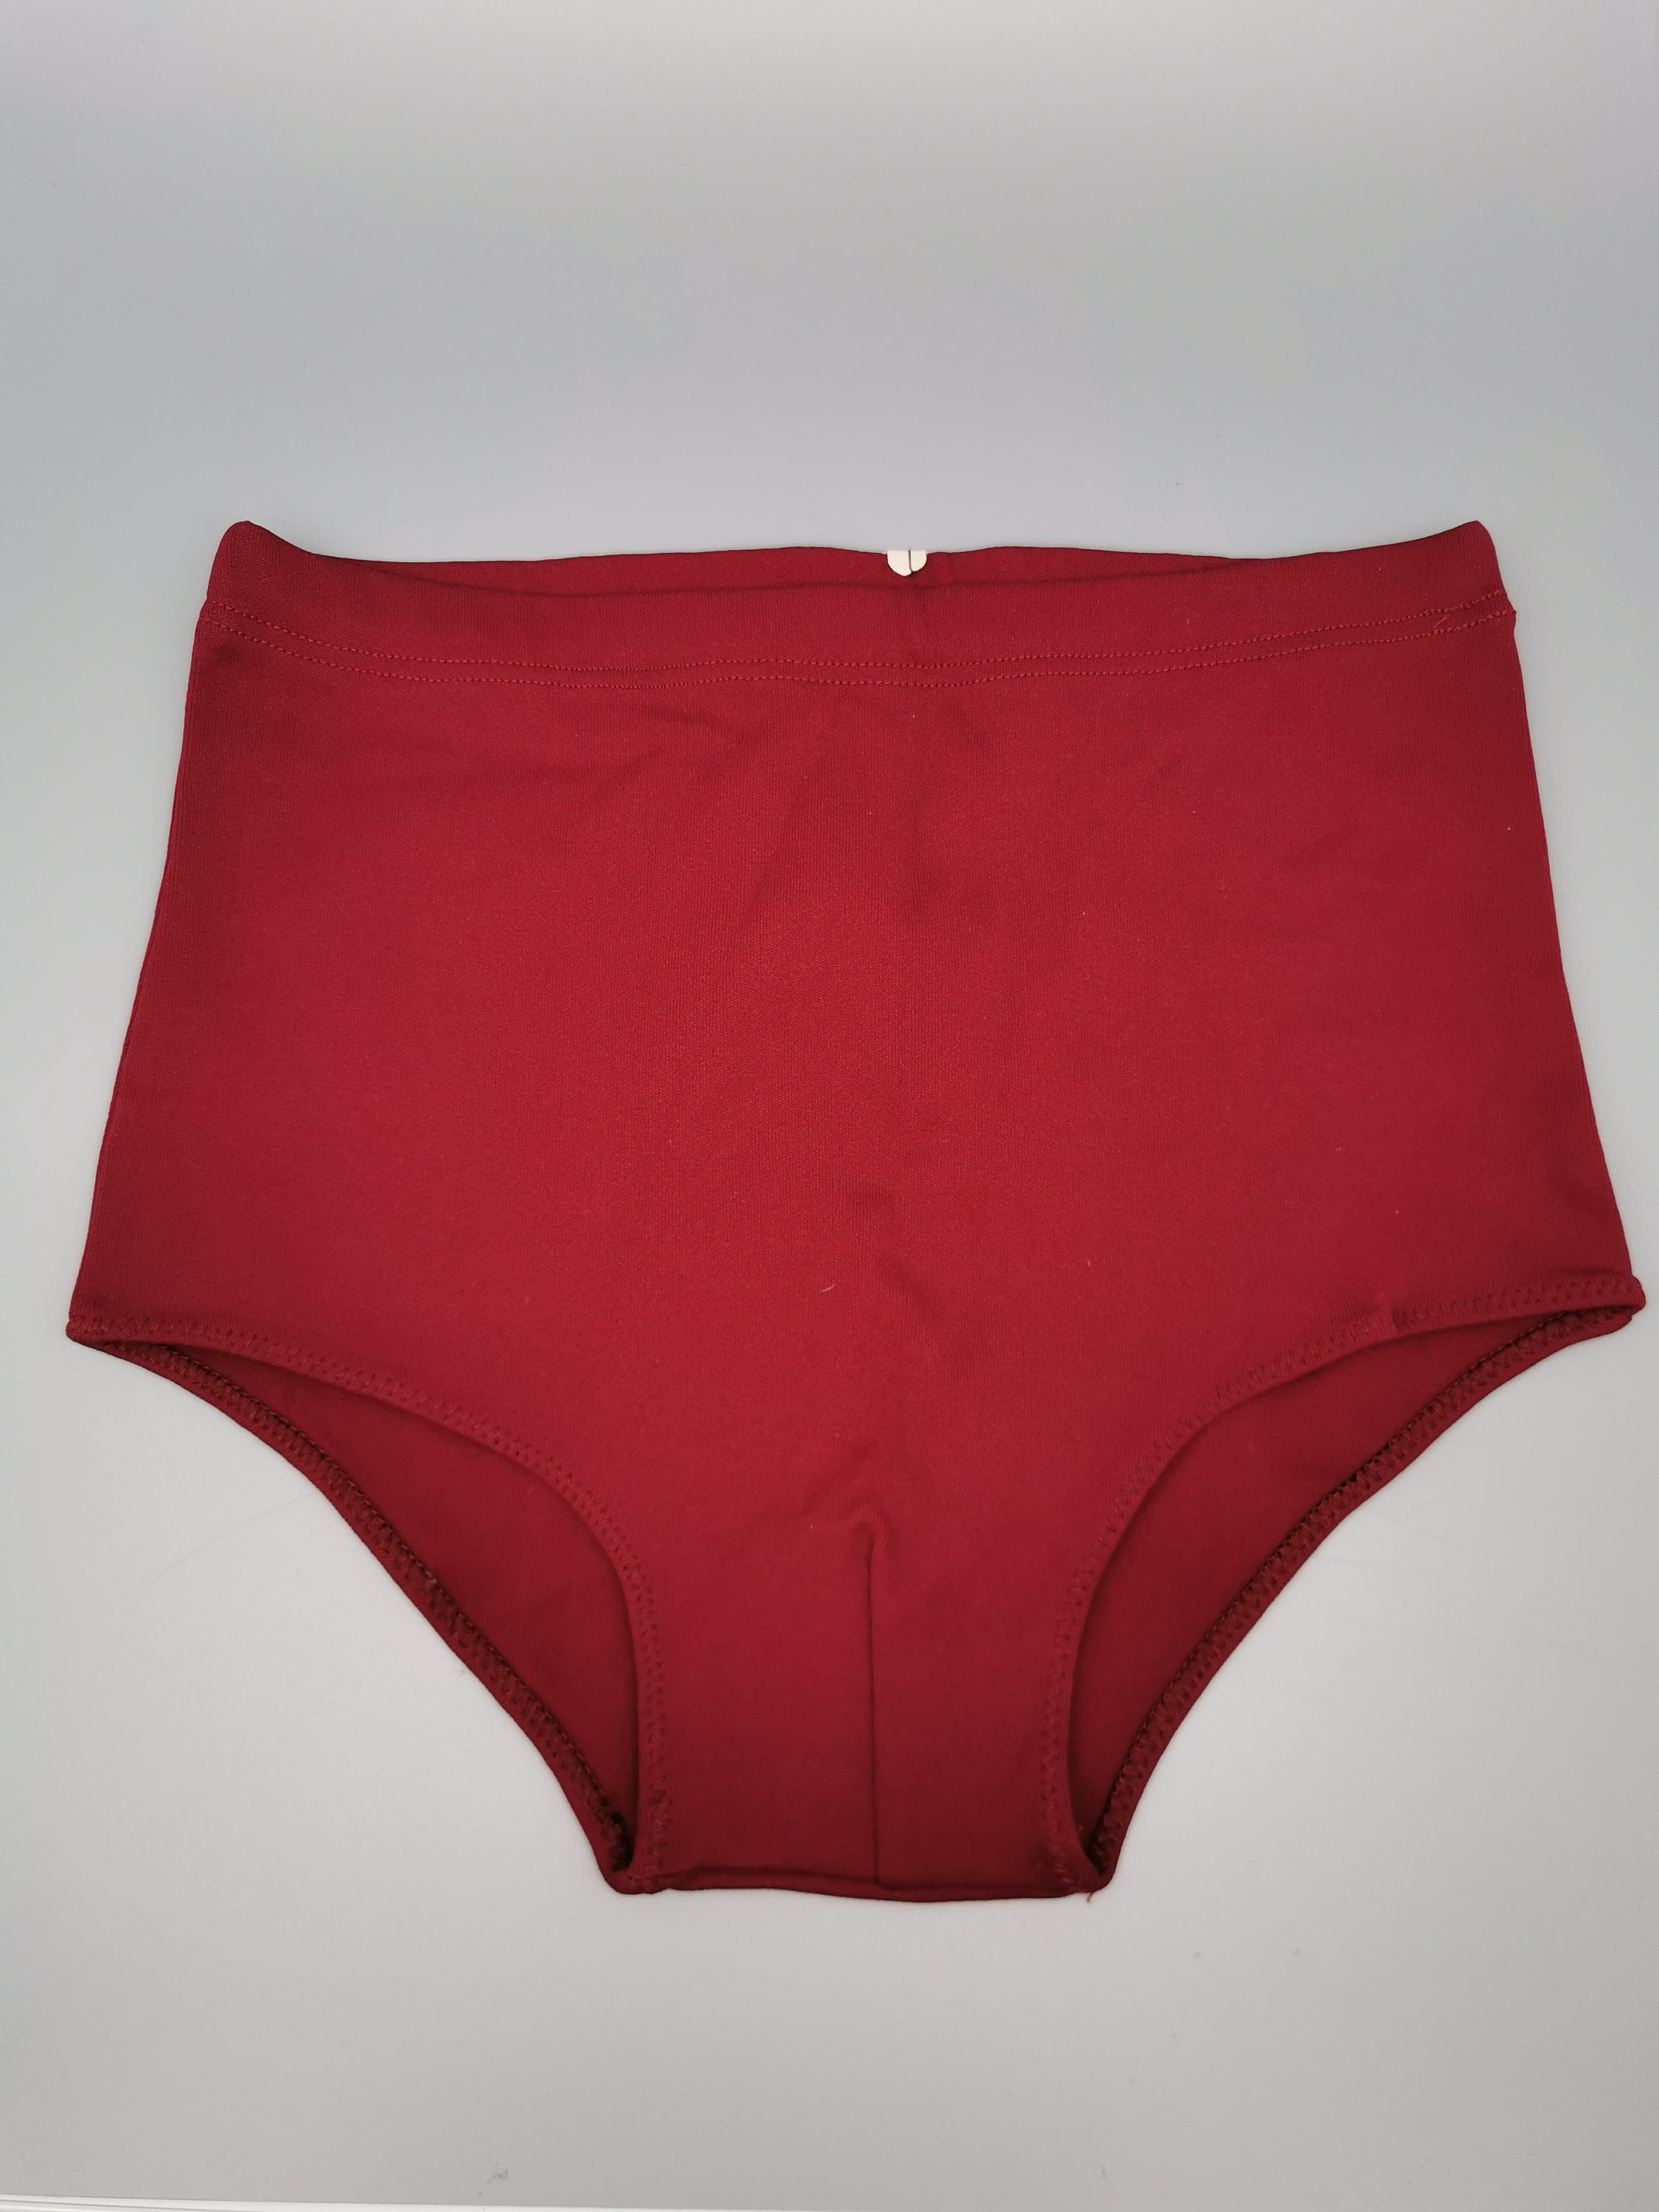 Charlemagne Navy Briefs  Men's sheer Bikini Briefs in red Embroidered Mesh